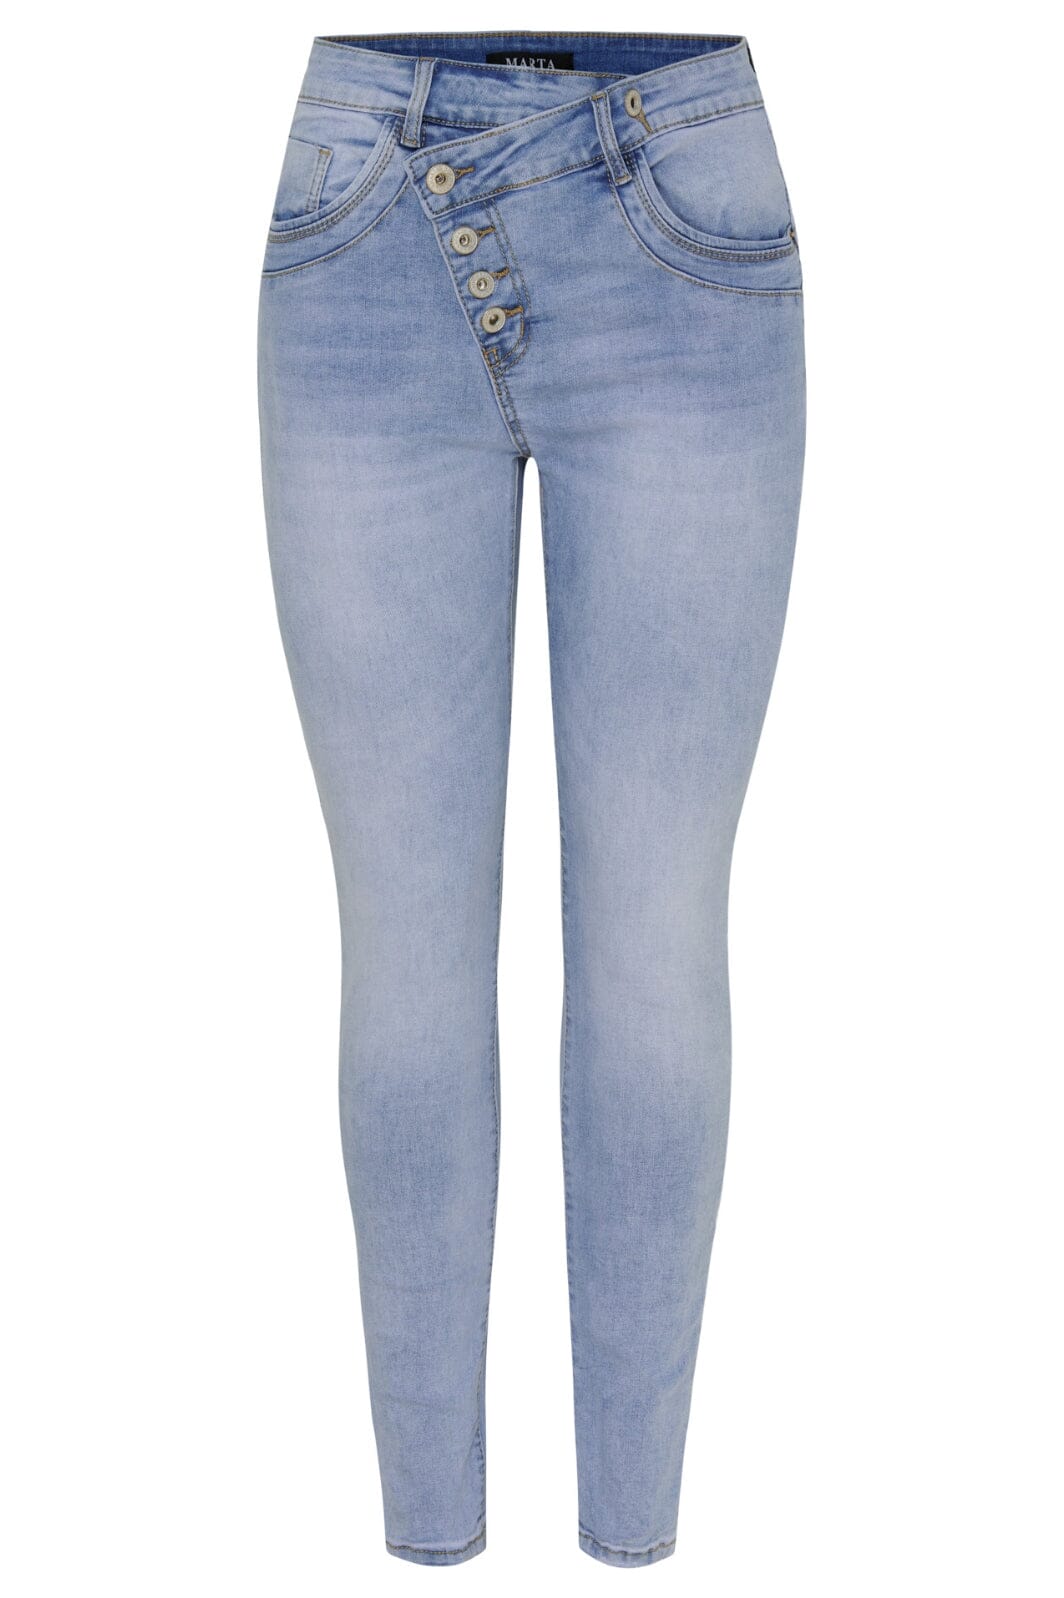 Marta Du Chateau - Emma 26115 Jeans - Dark Blue Denim Jeans 